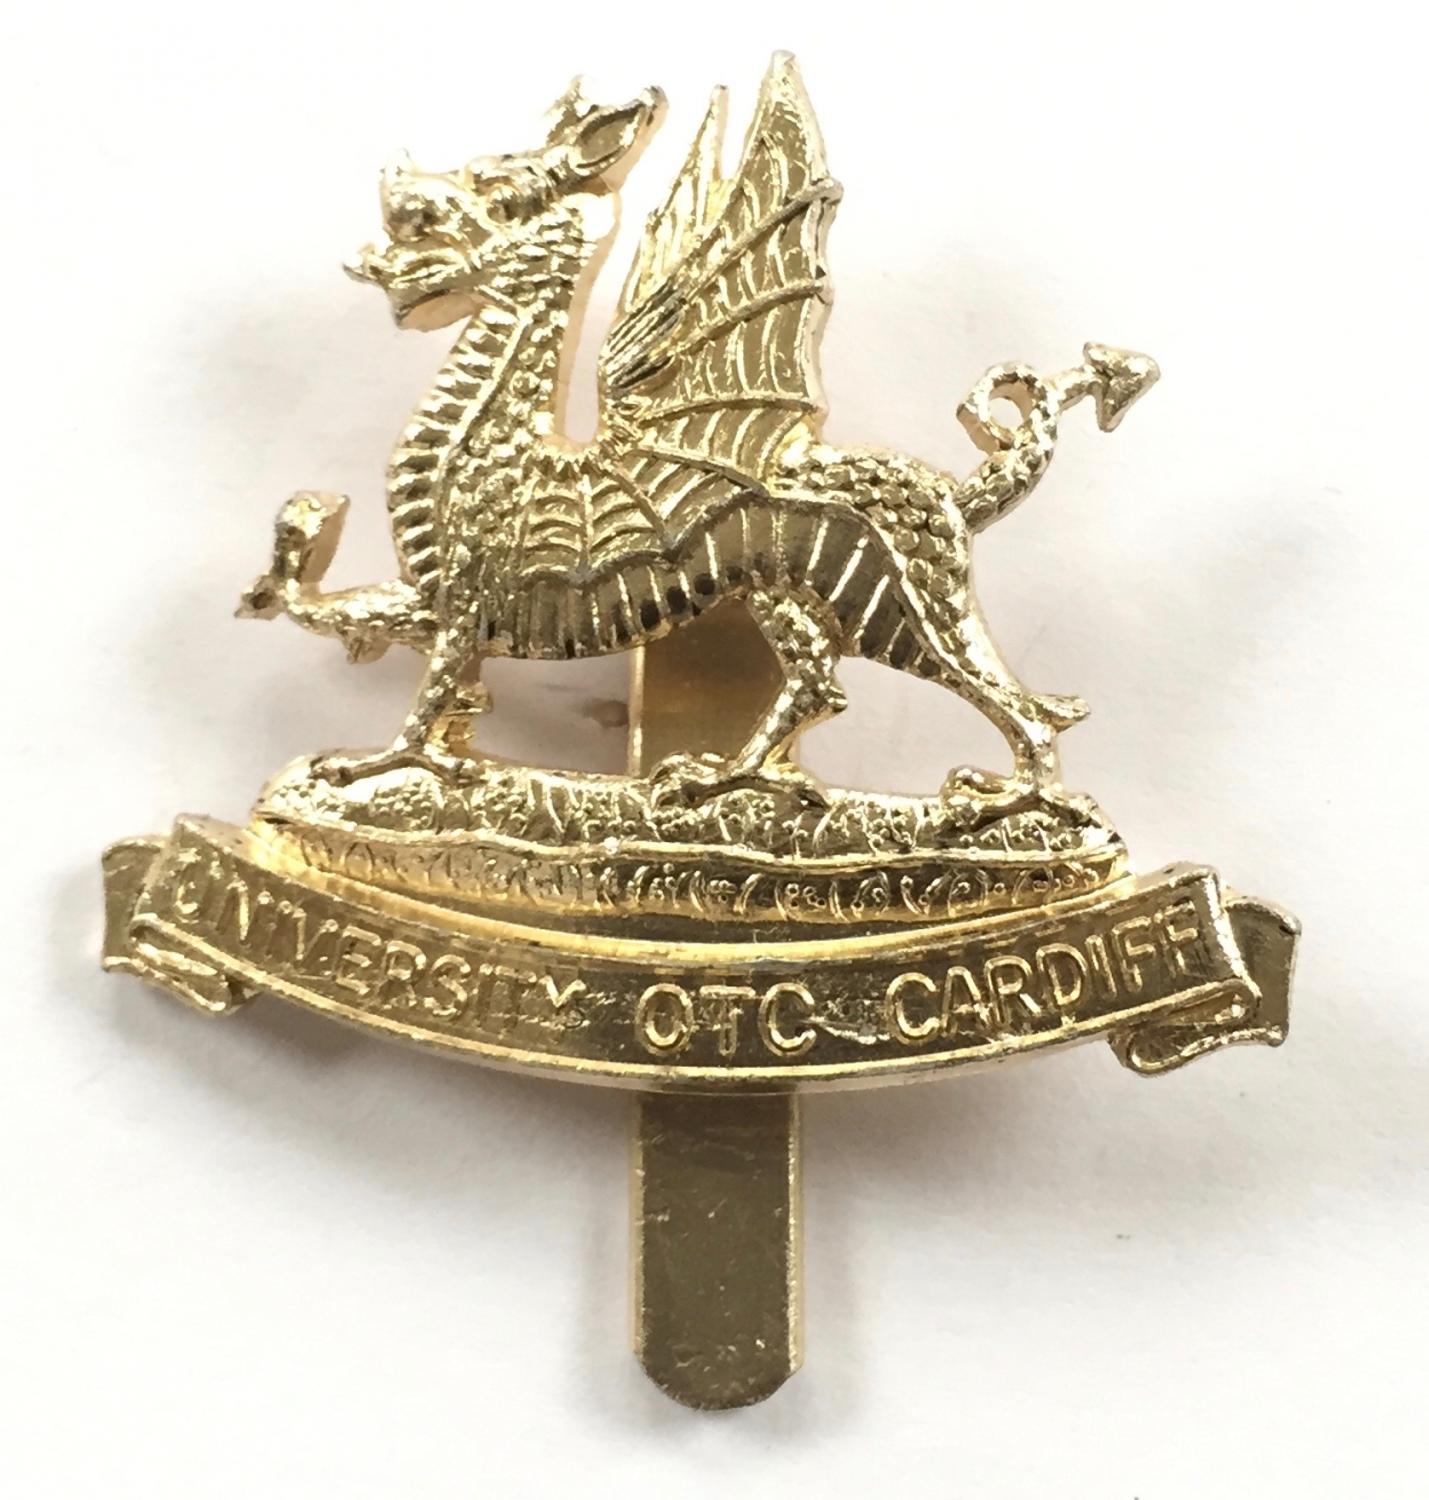 Cardiff University OTC anodised cap badge